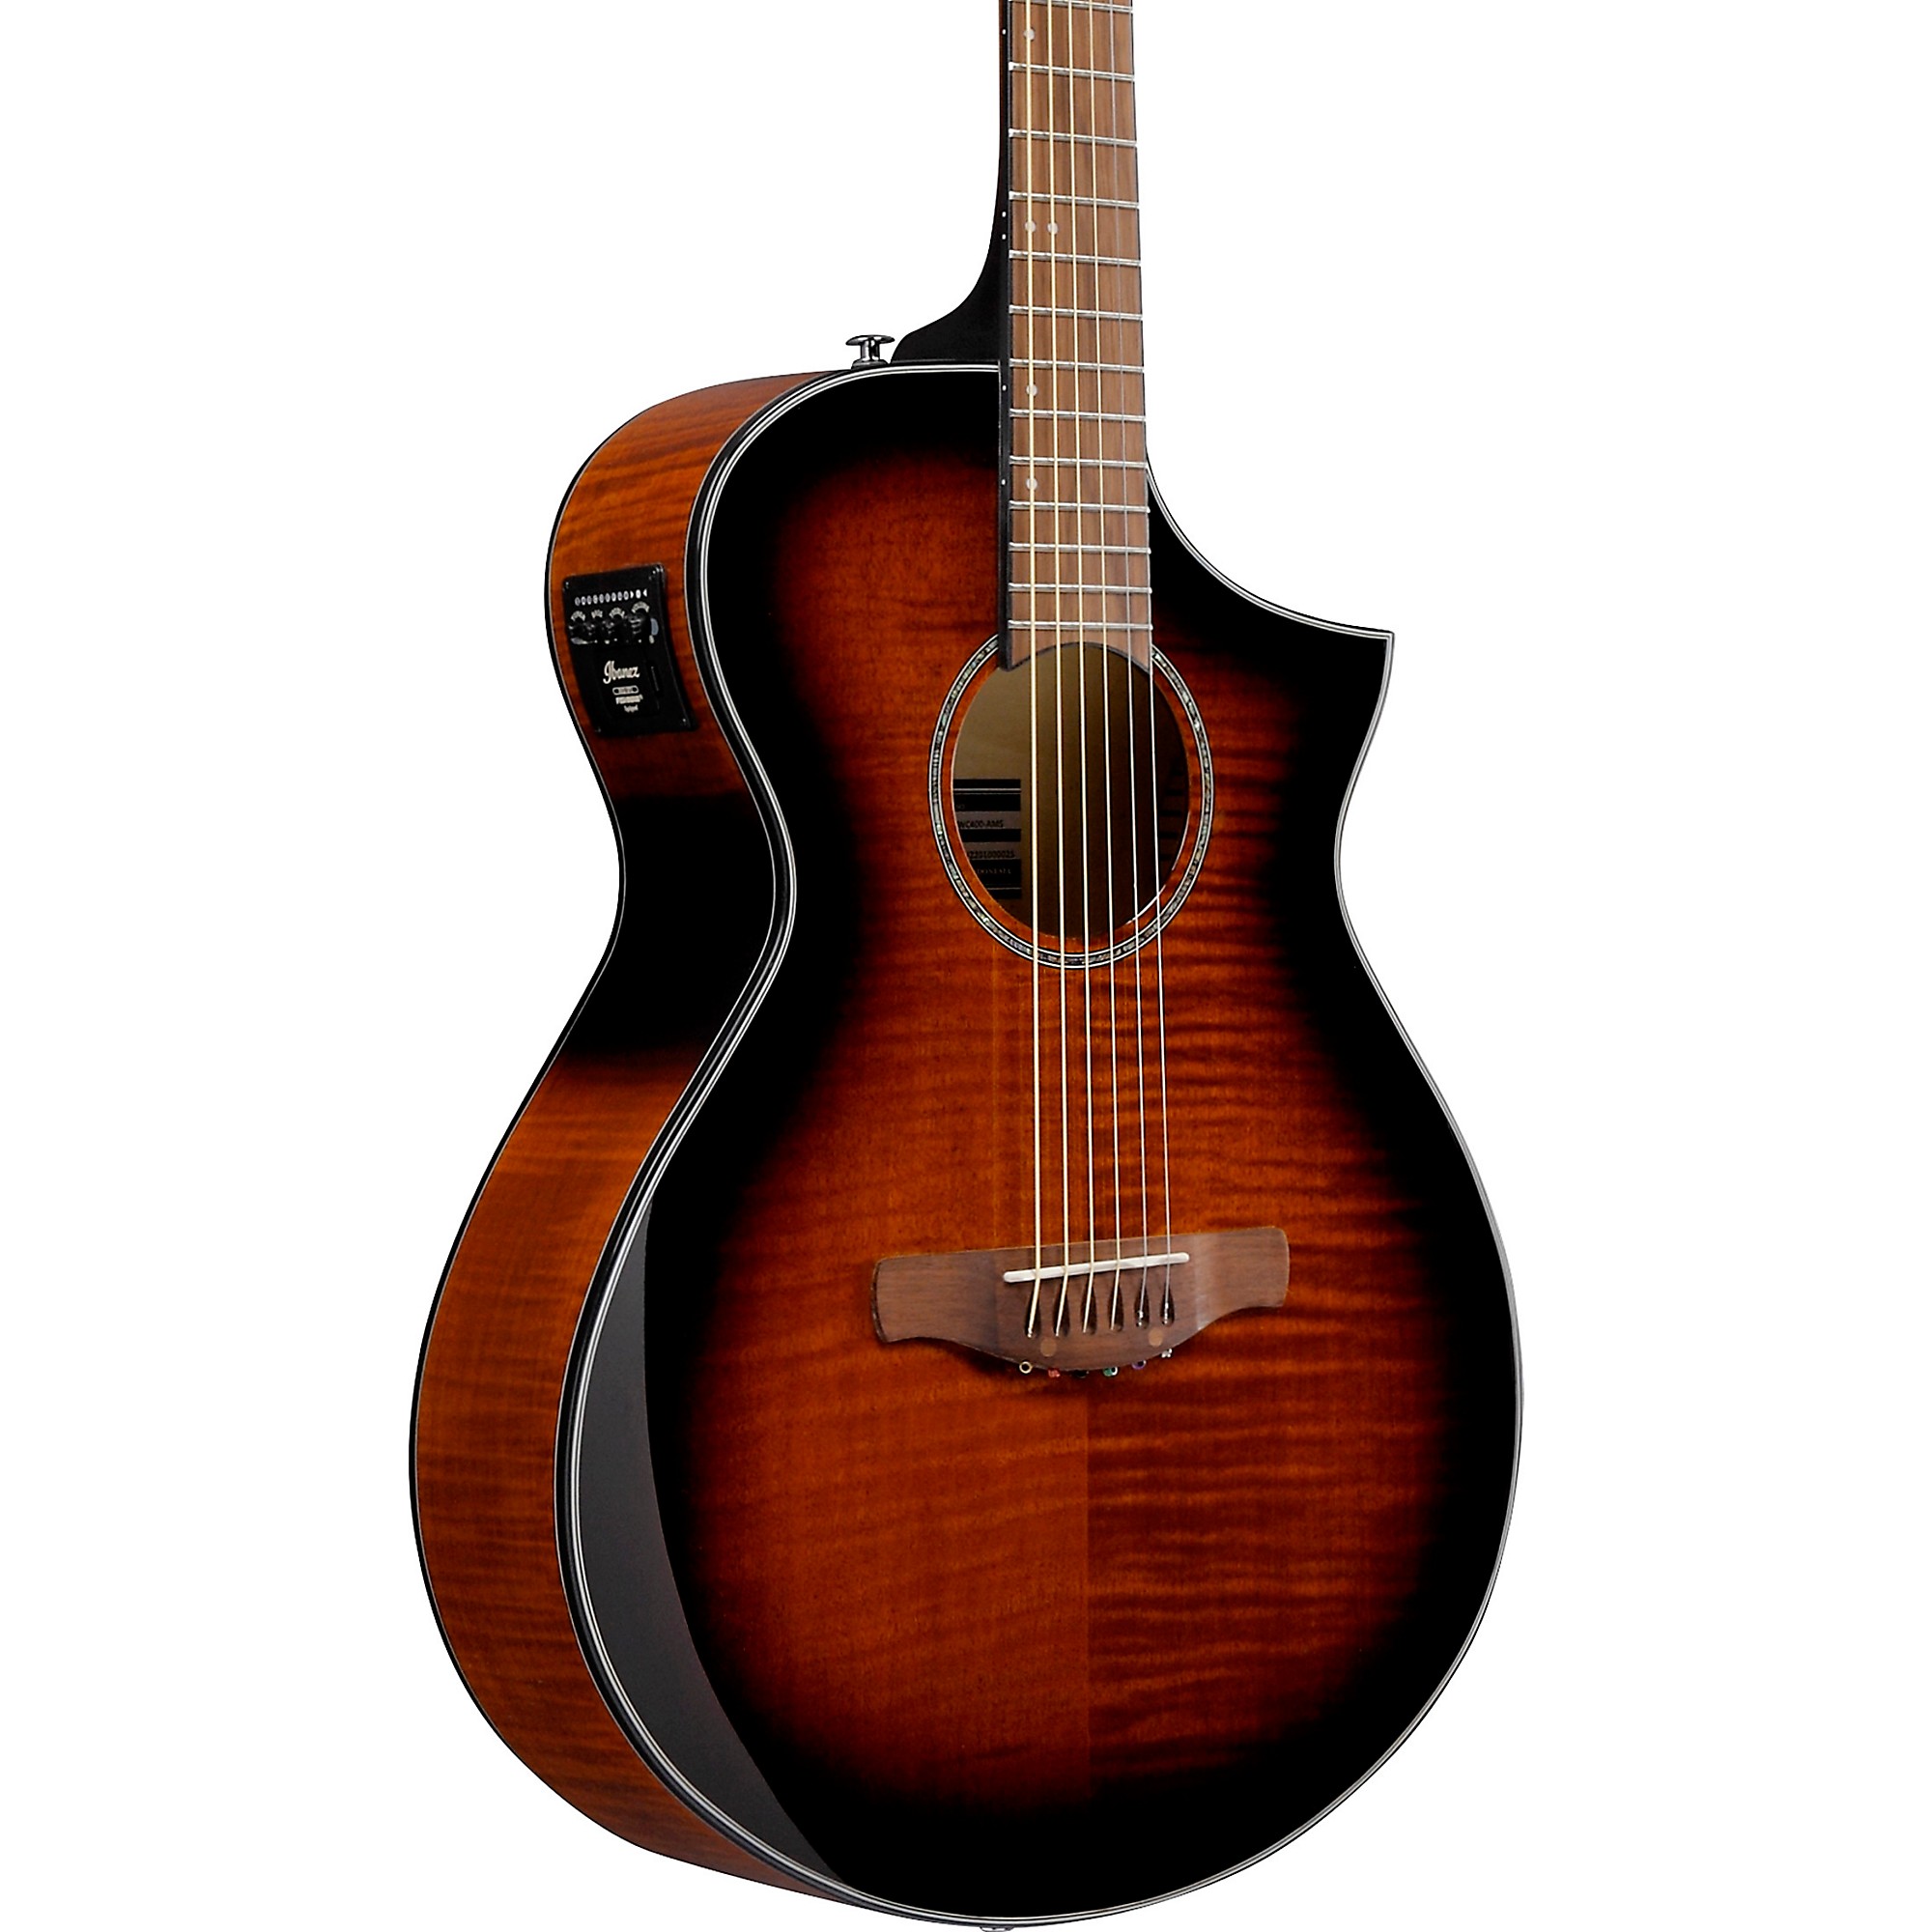 Акустически-электрическая гитара Ibanez AEWC400 Comfort Amber Sunburst